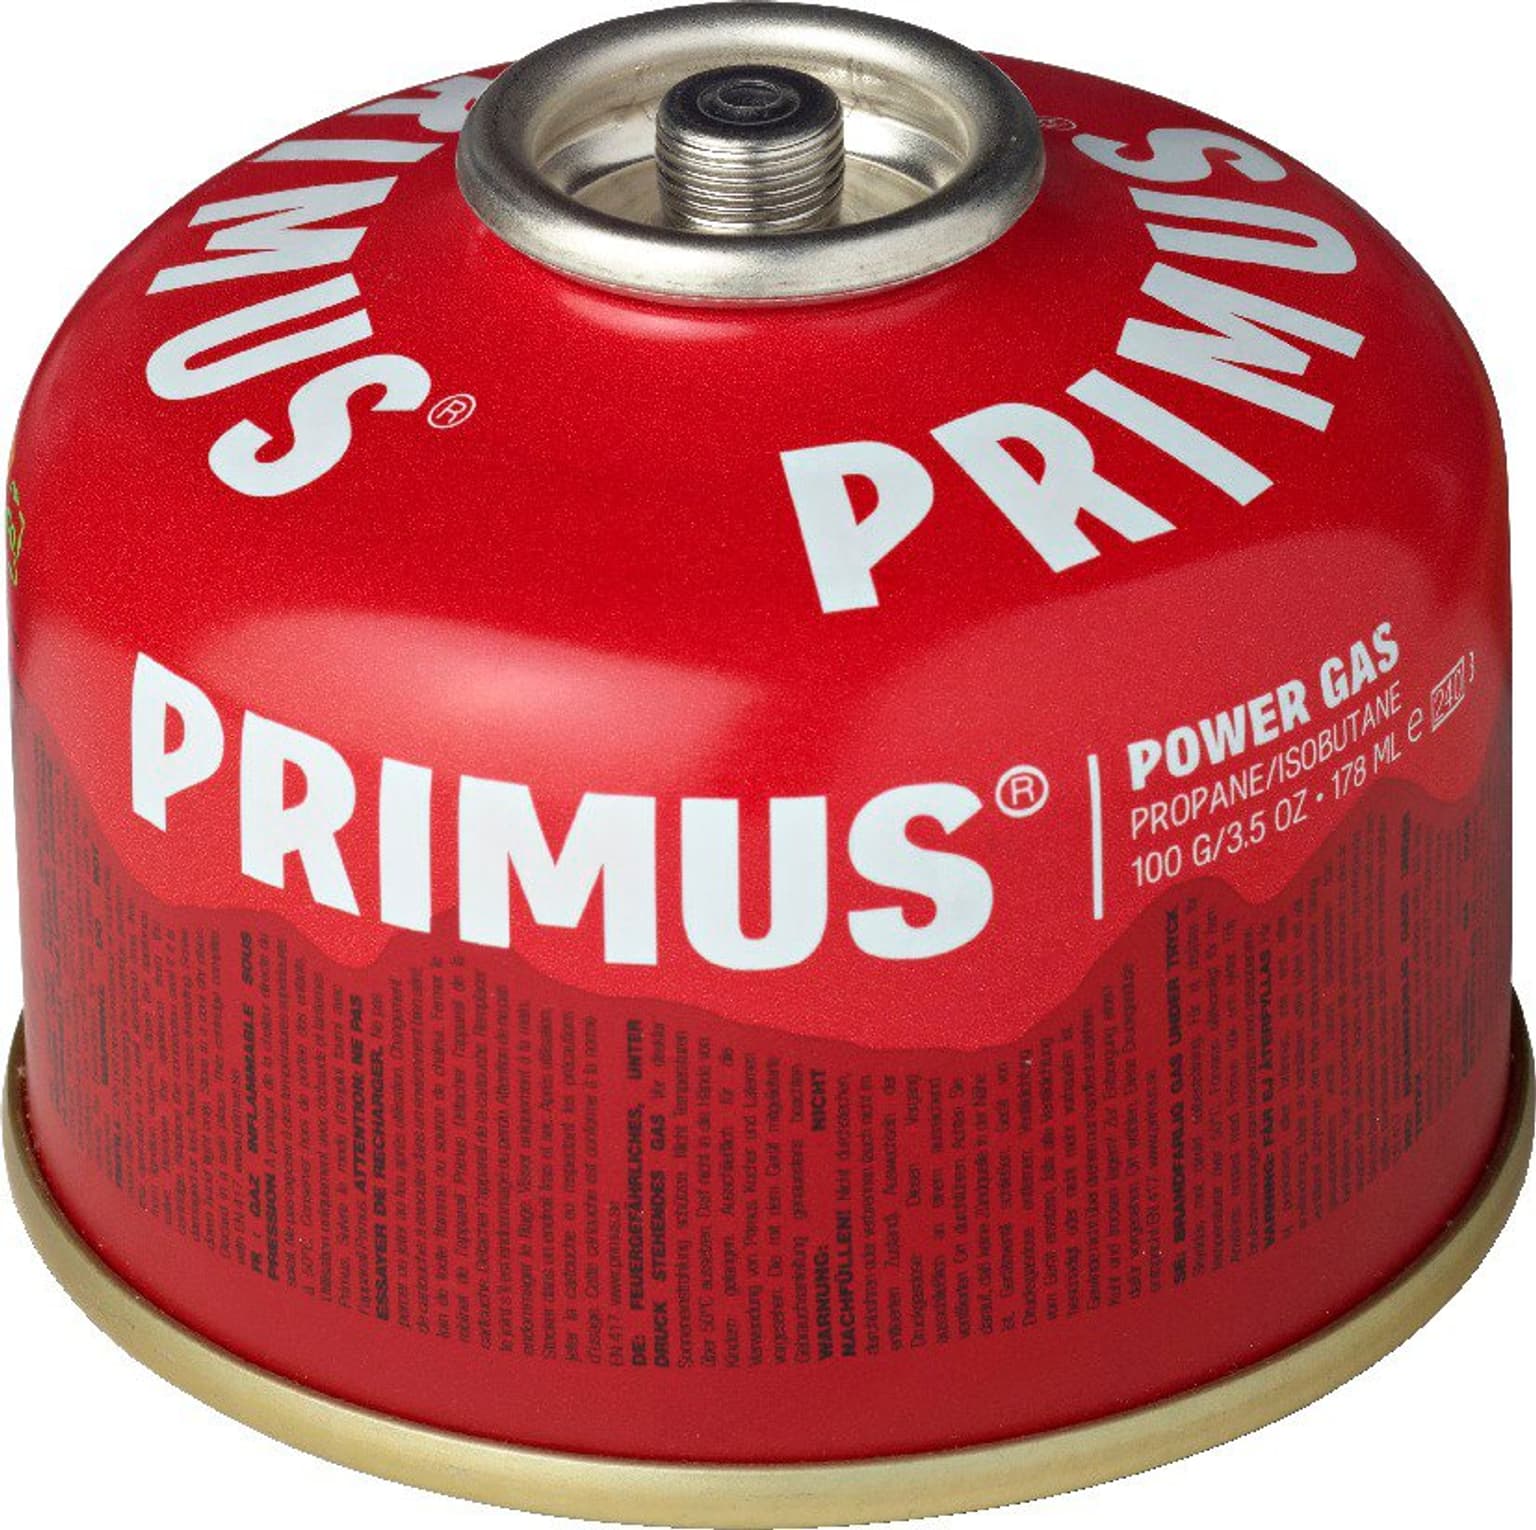 Primus Primus Kartusche 100 g Cartouche de gaz 2